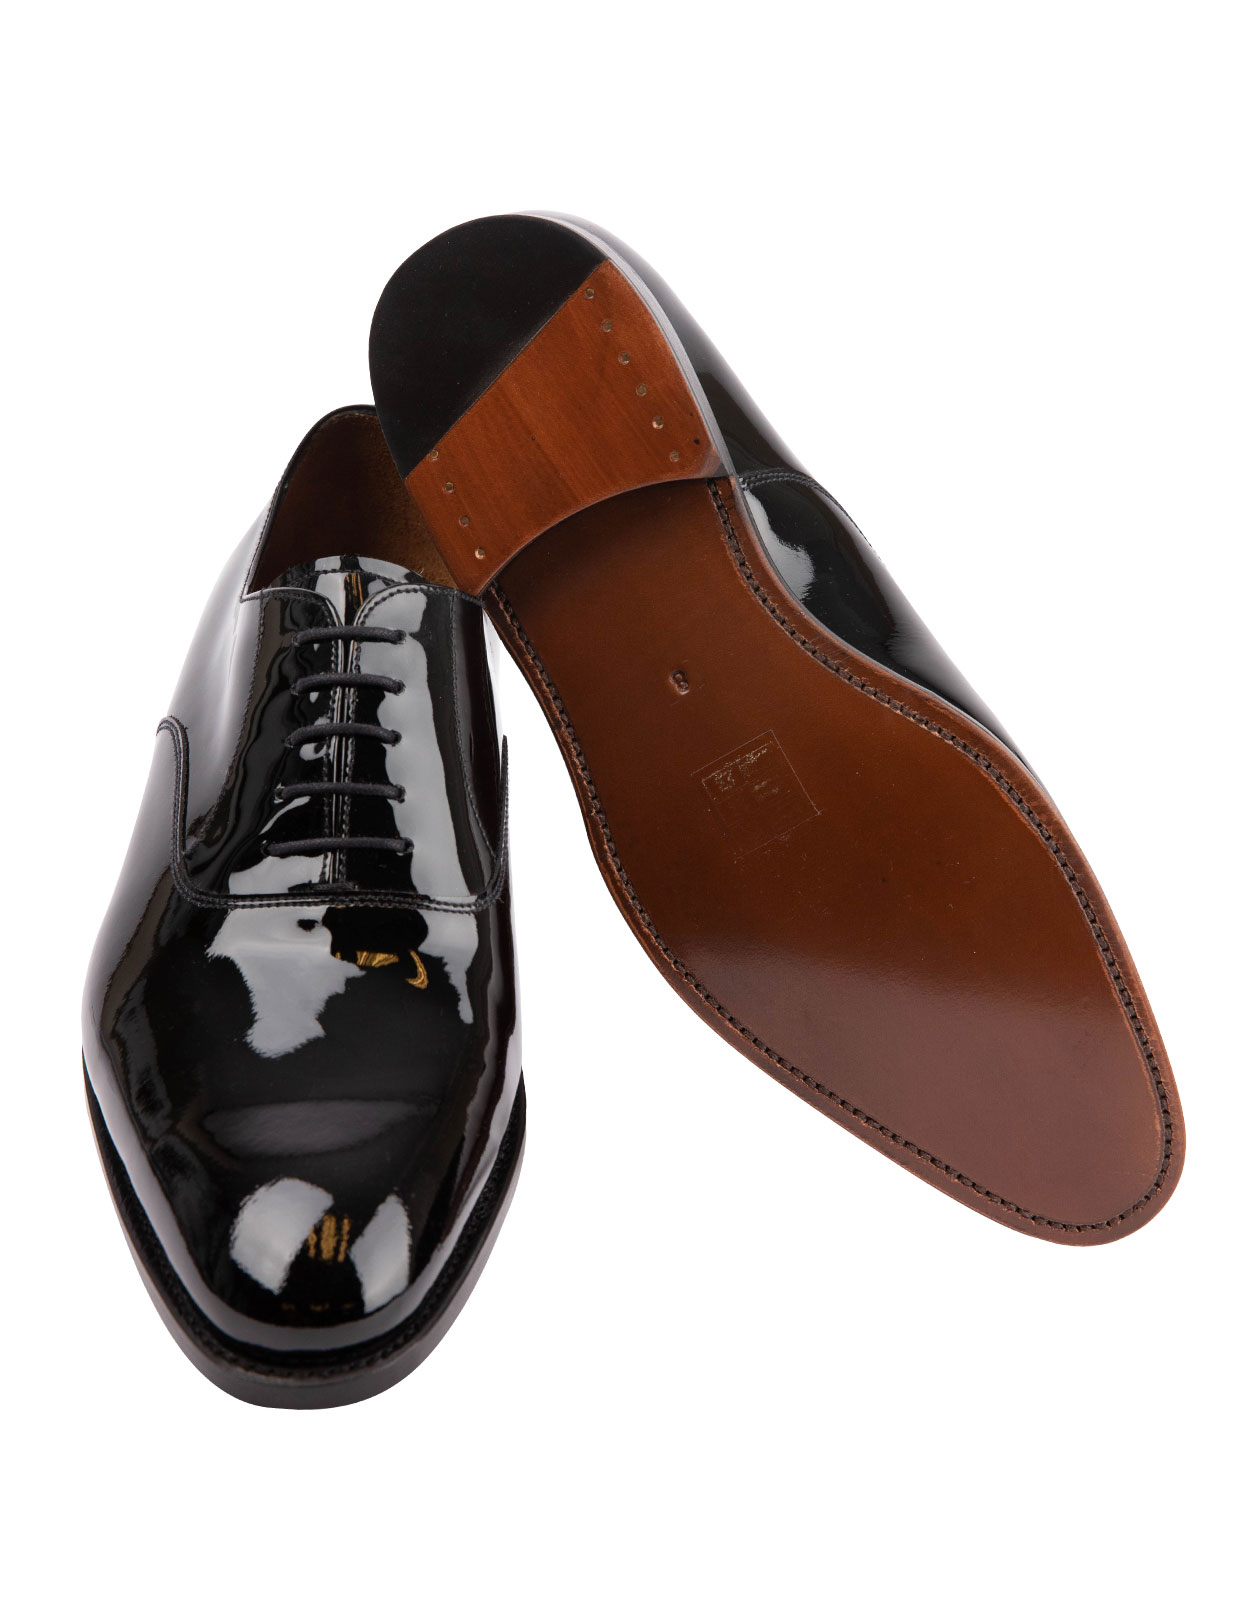 Patent Leather Oxford Shoe Black Stl 7.5